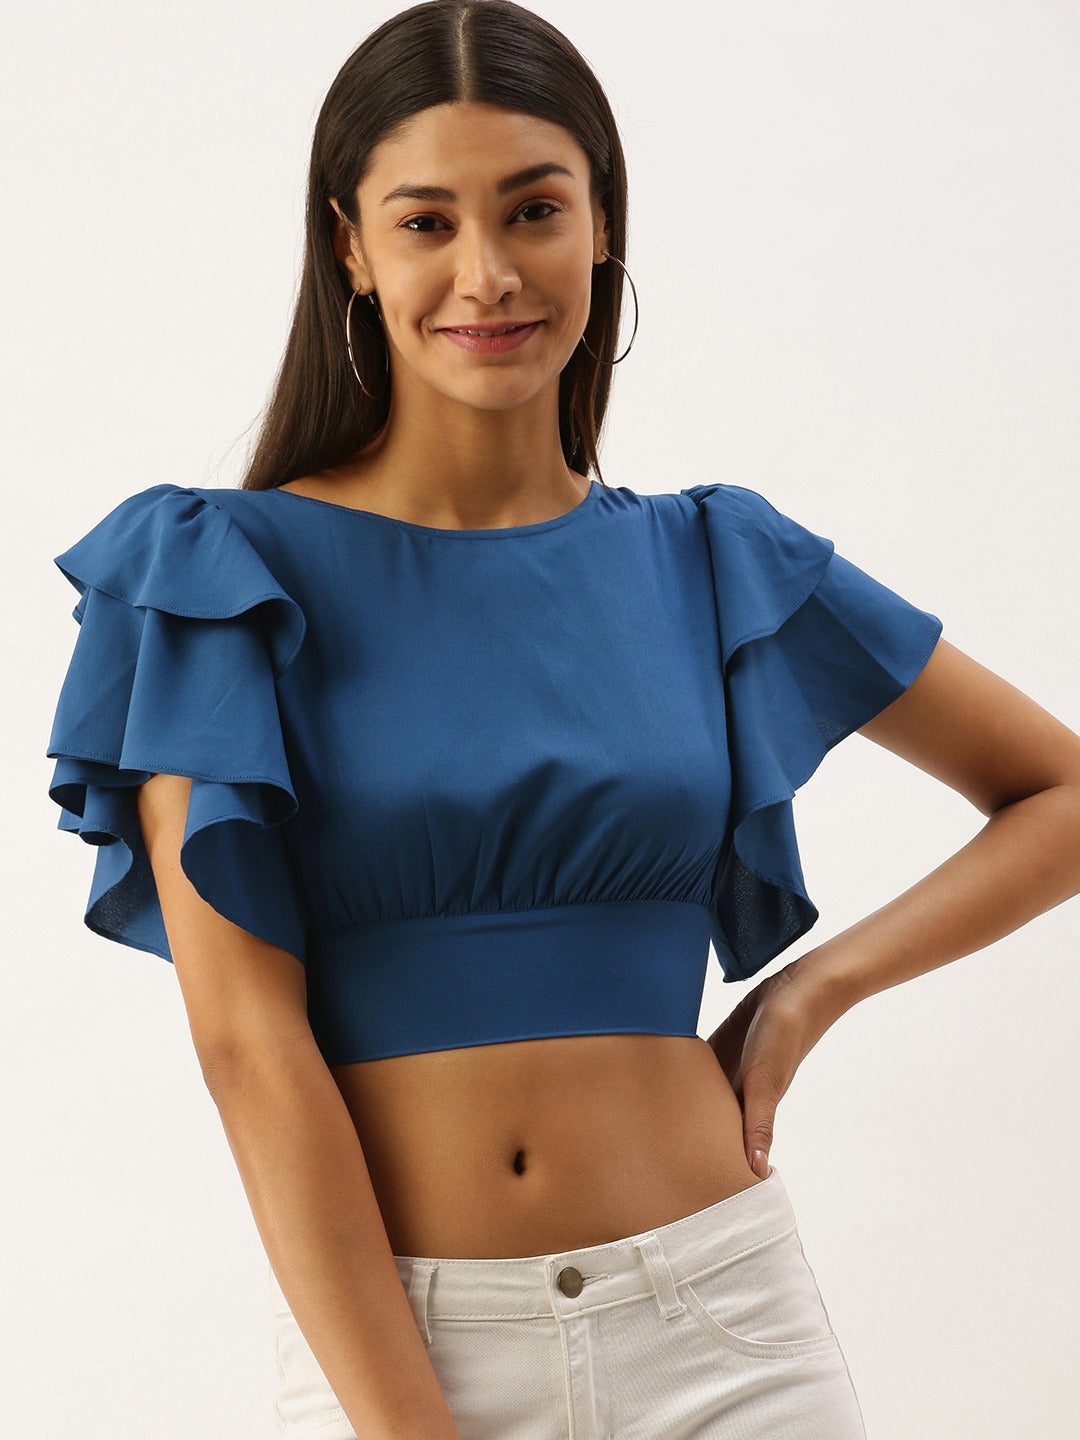 Berrylush Women Solid Blue Open-Back Blouson Crop Top